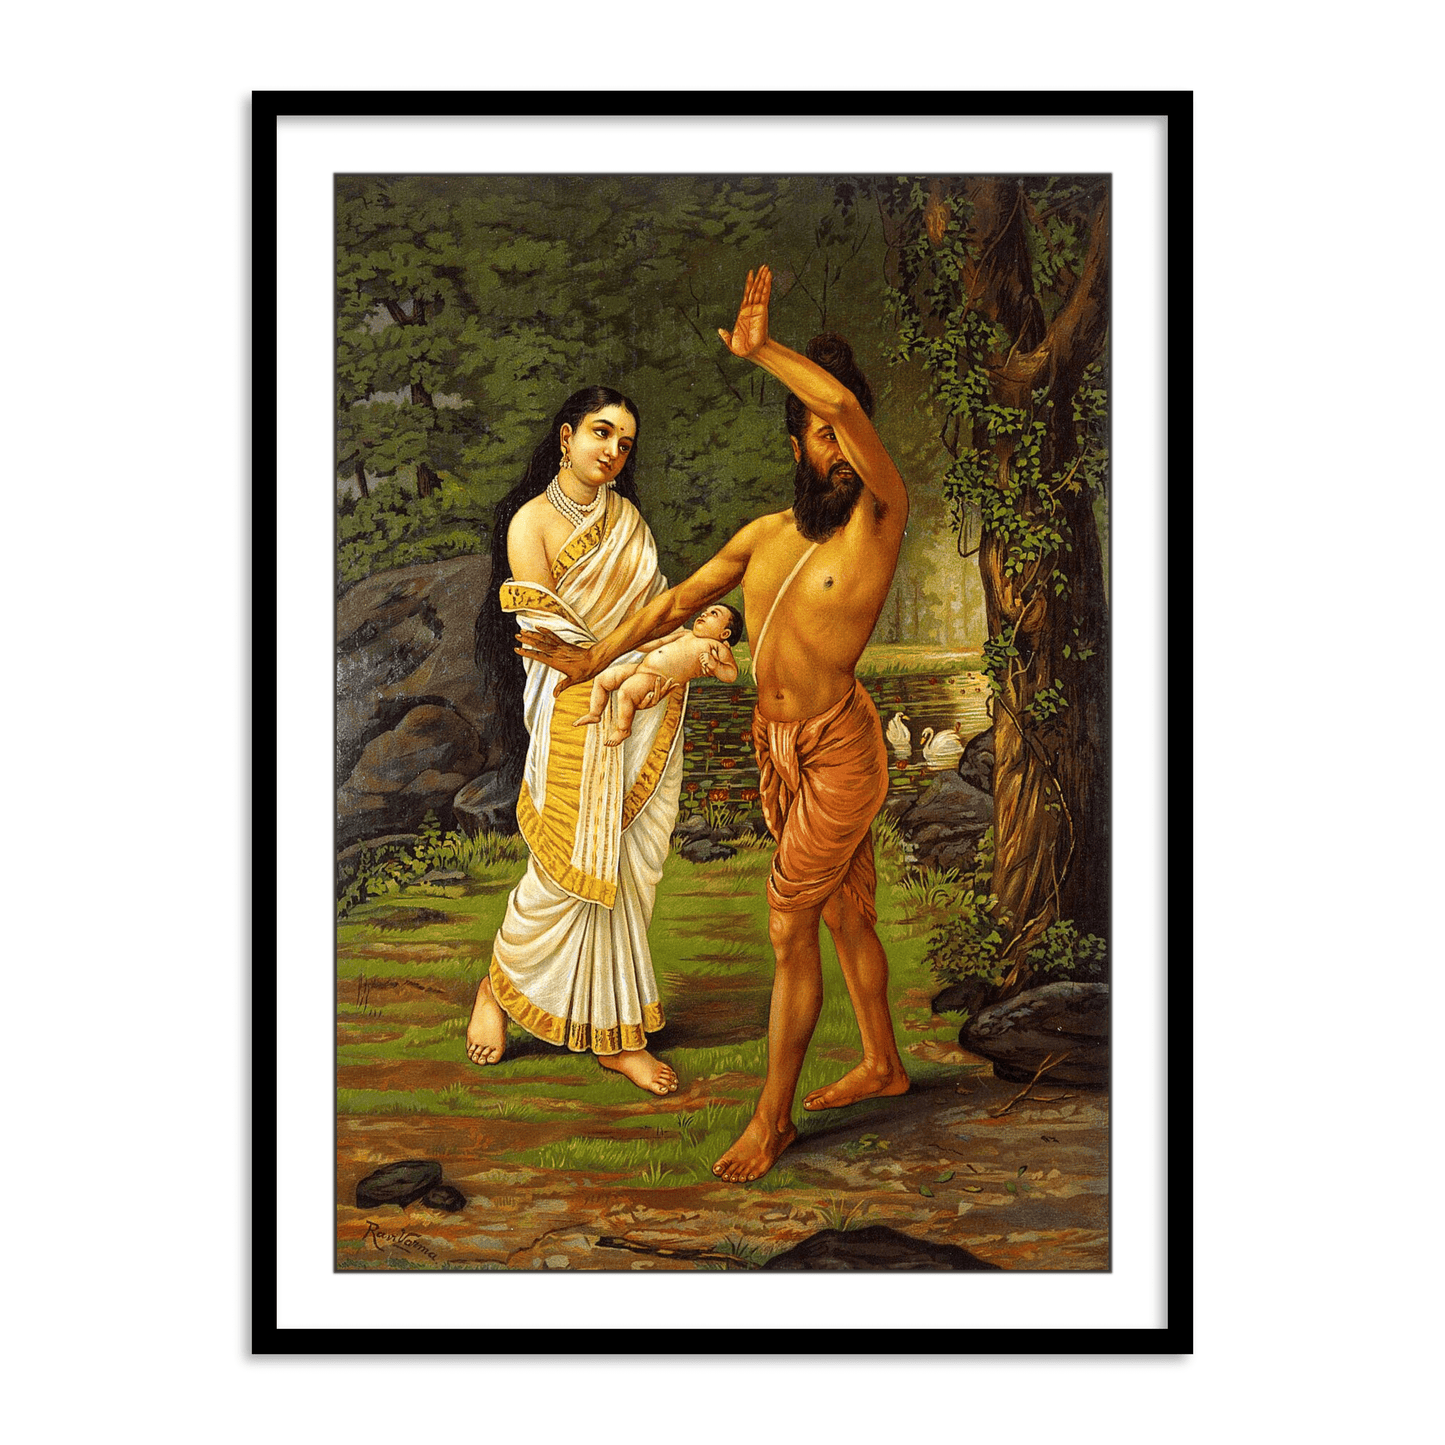 Vishwamitra rejecting his daughter Sakuntala's birth by Raja Ravi Varma Wall Art Decor